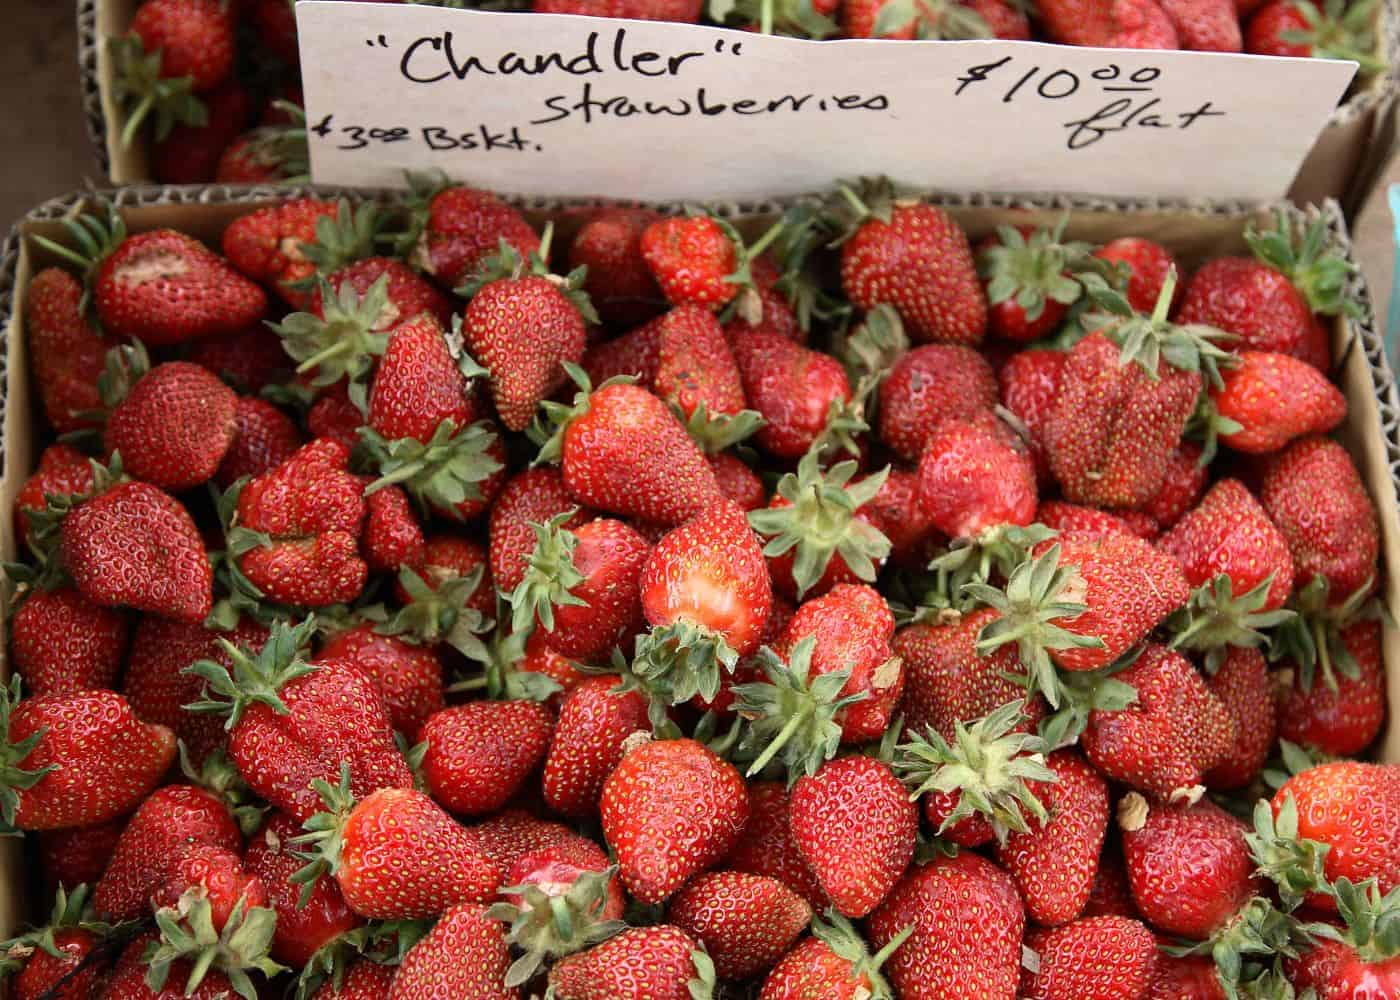 Chandler strawberries